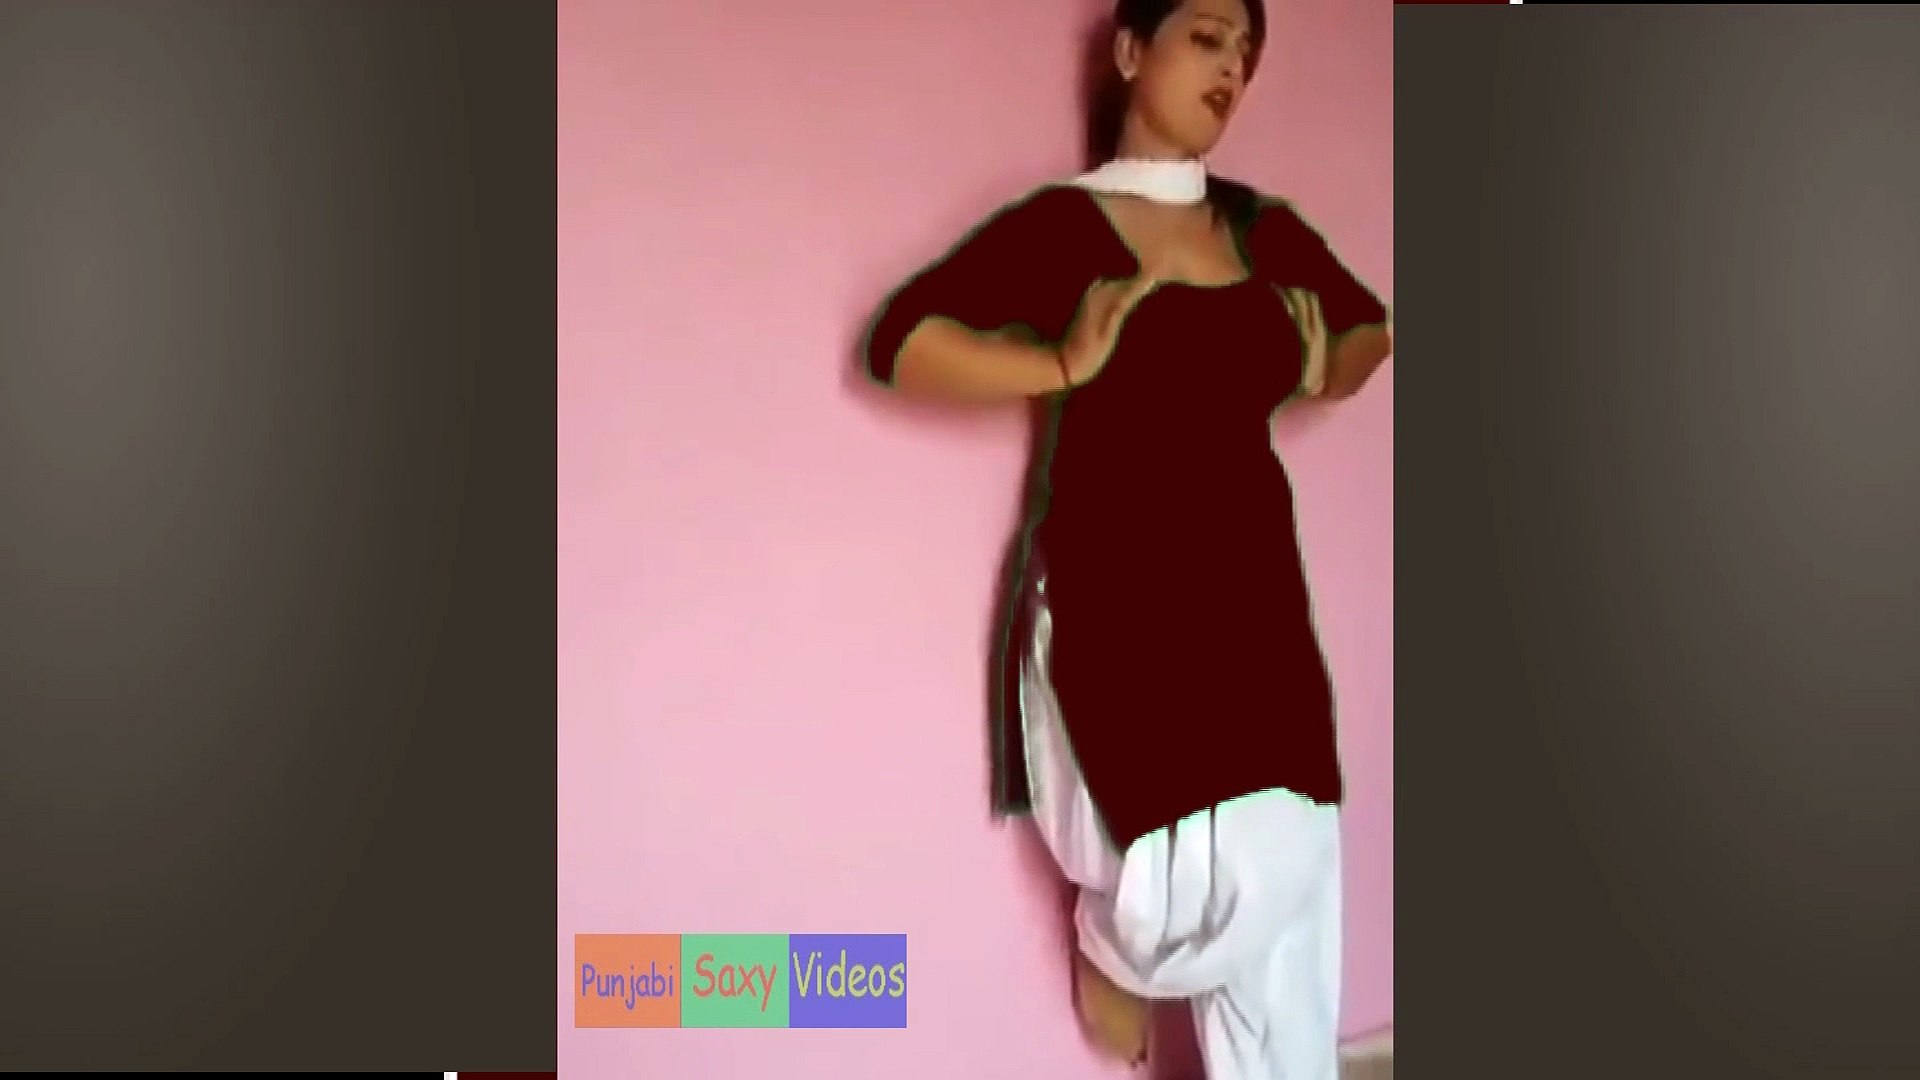 Punjabisaxyvideos - Singing and Best Dance From Punjabi Girl - video Dailymotion